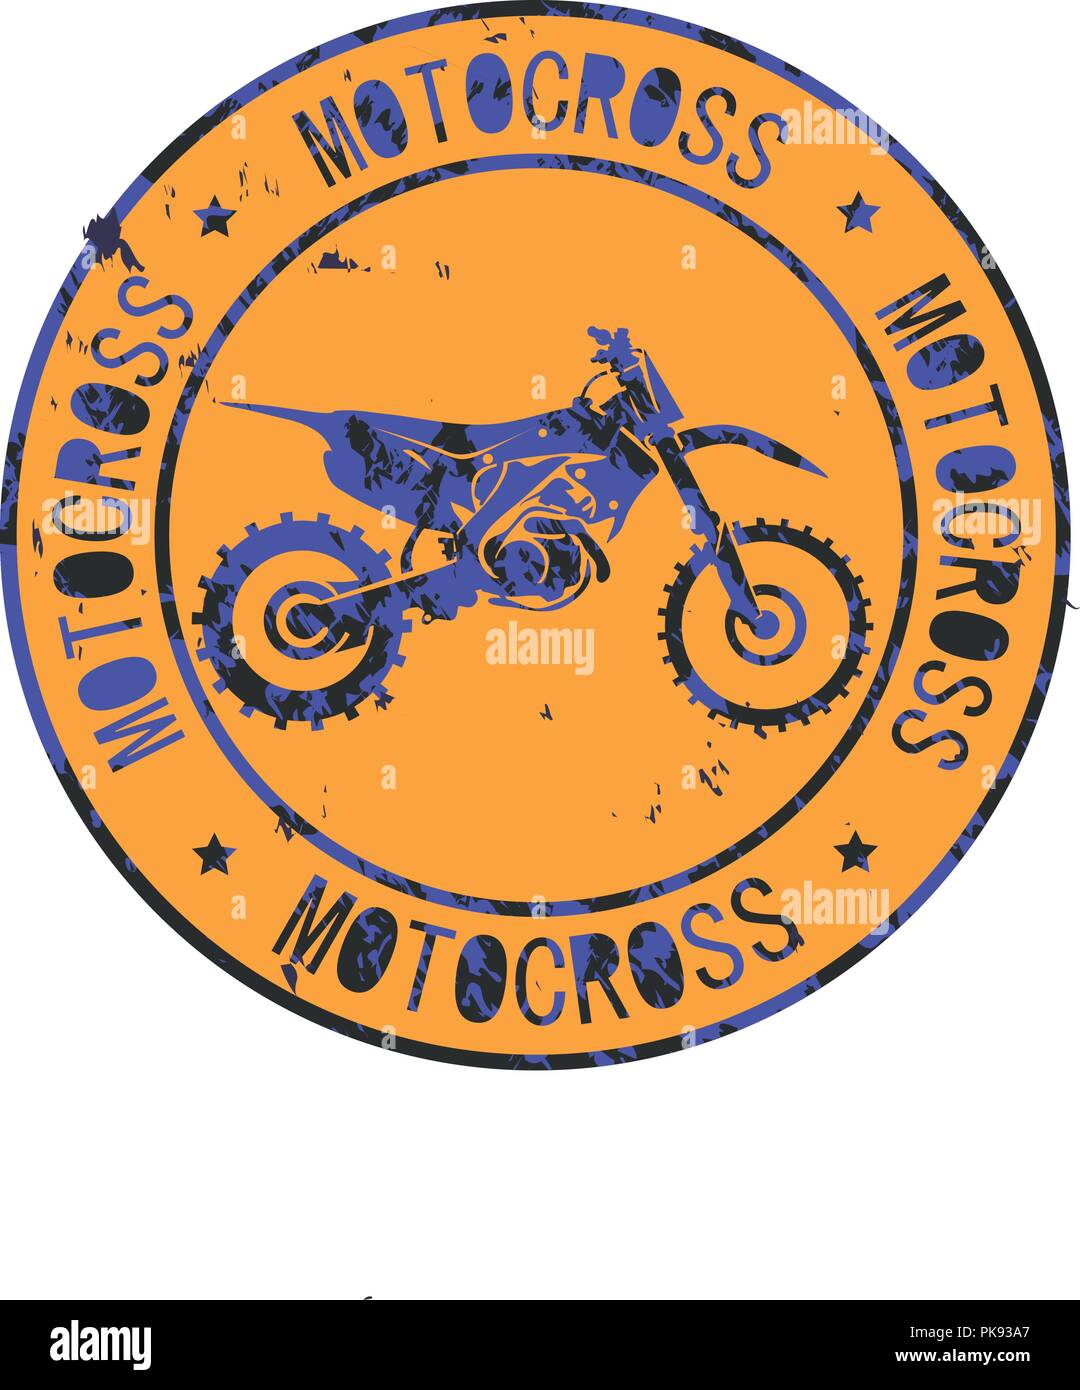 L'icône club Motocross stamp Imprimer logo design Illustration de Vecteur